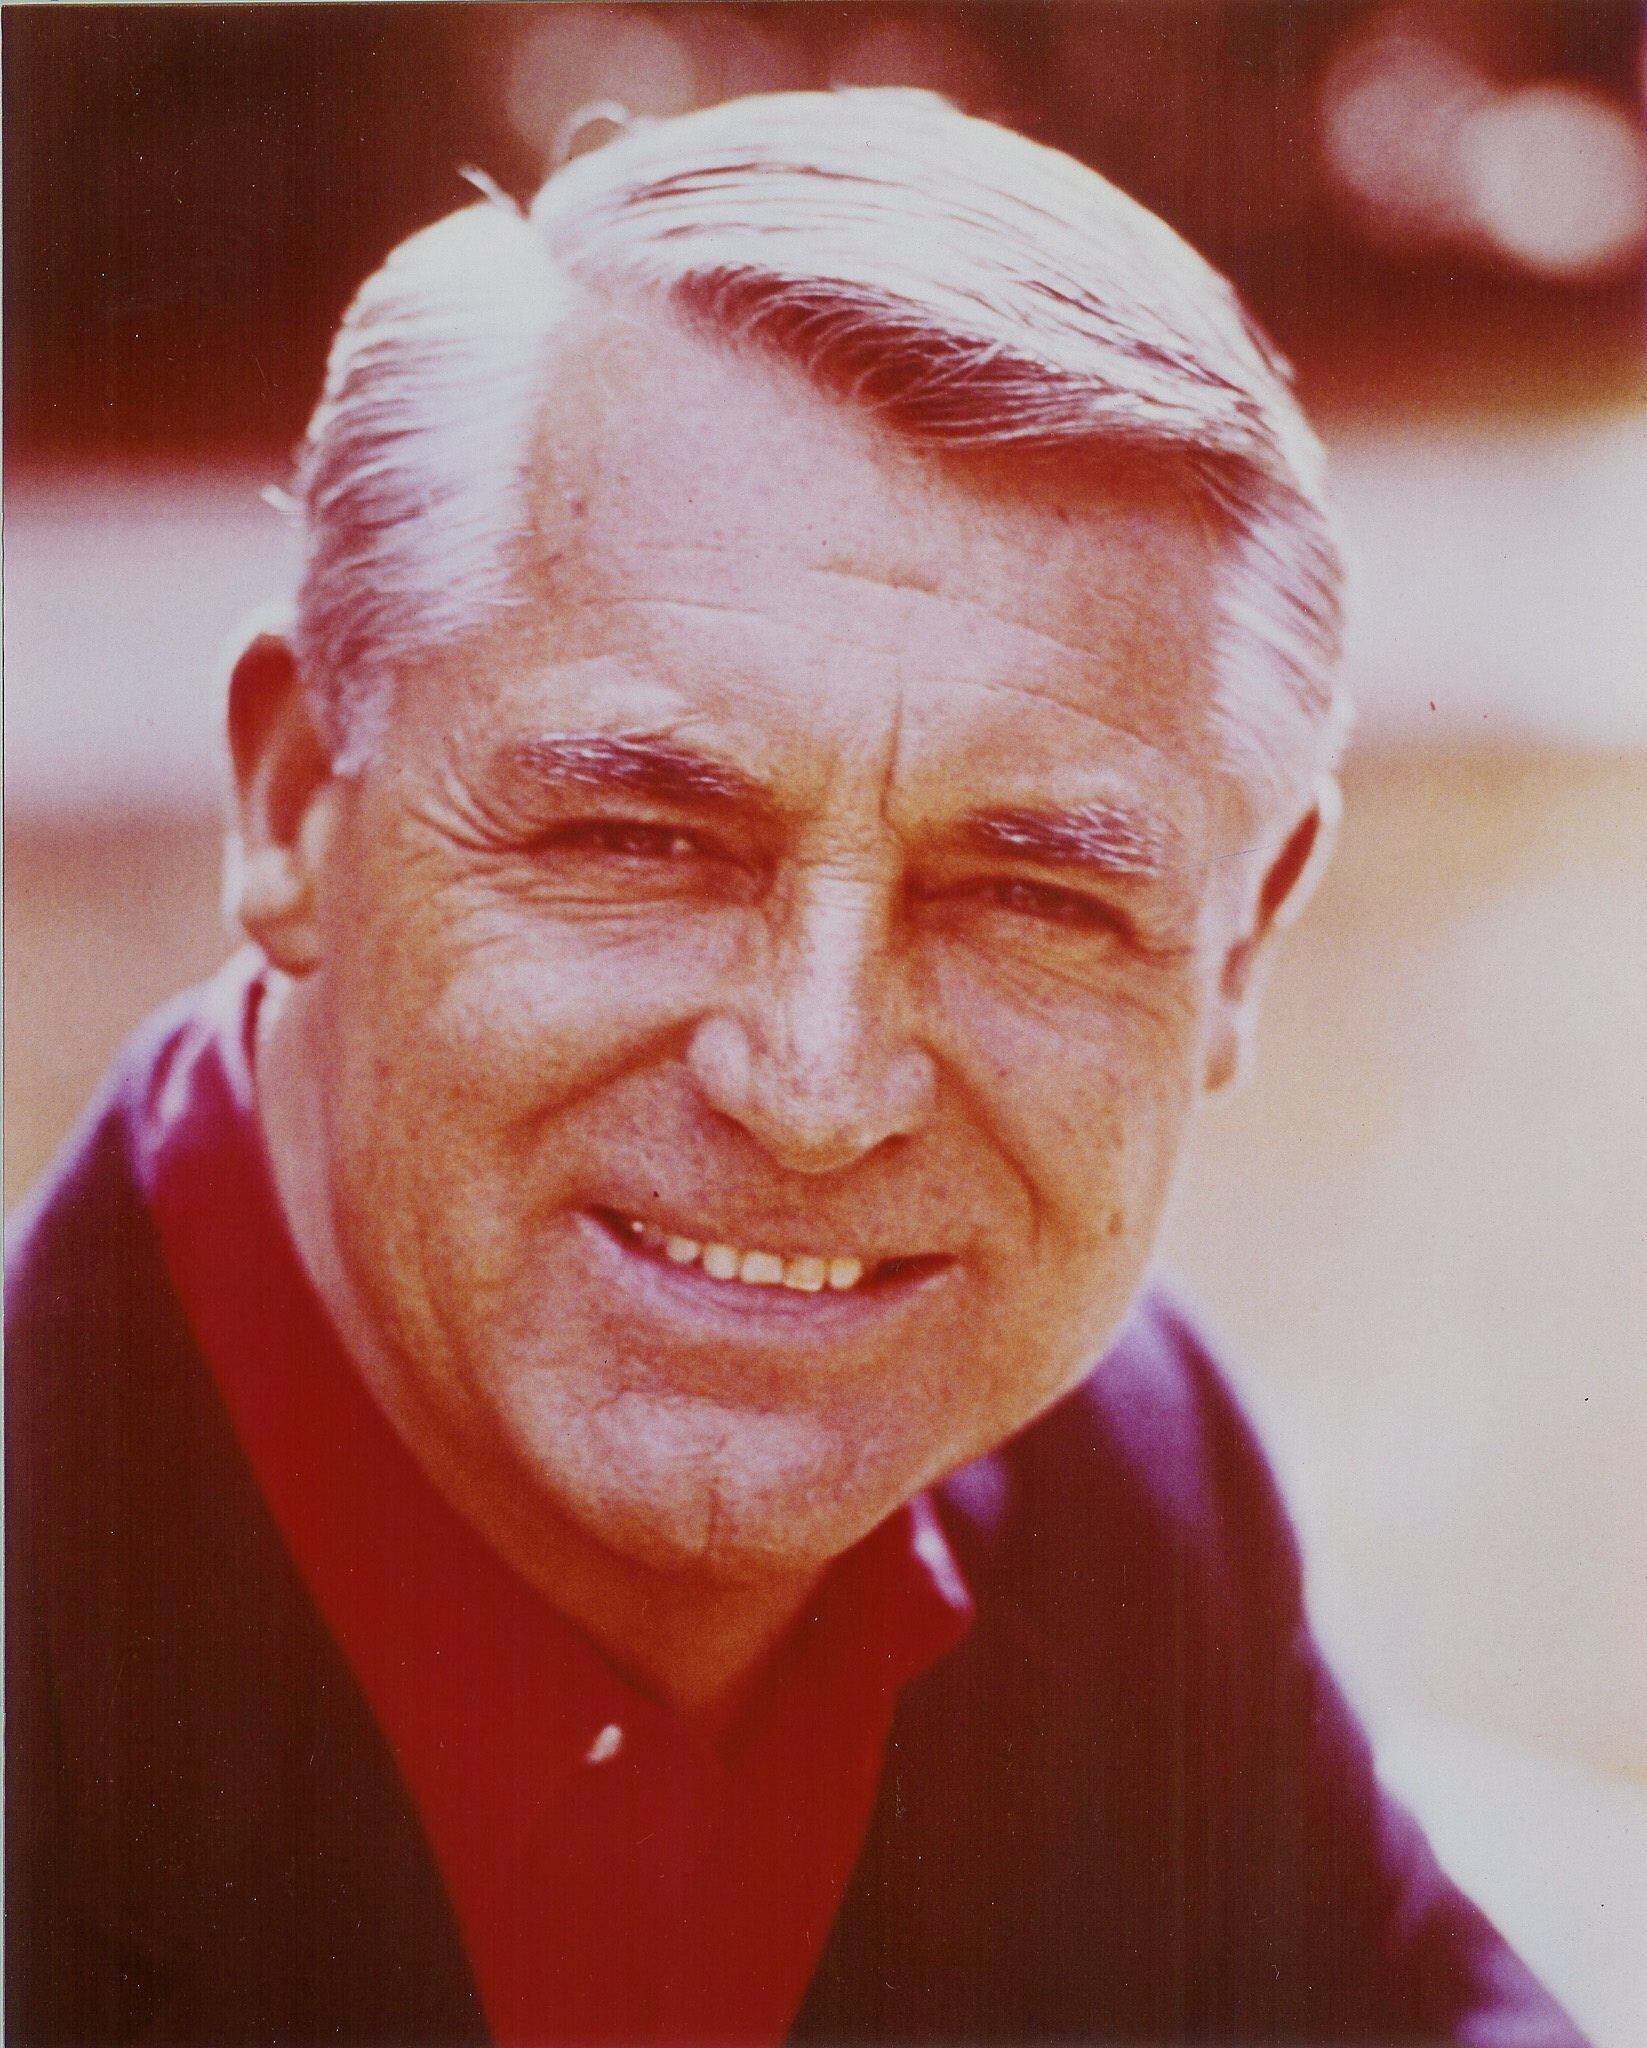 Cary Grant, en una imagen de archivo. EPA/HANDOUT/MGM PICTURES